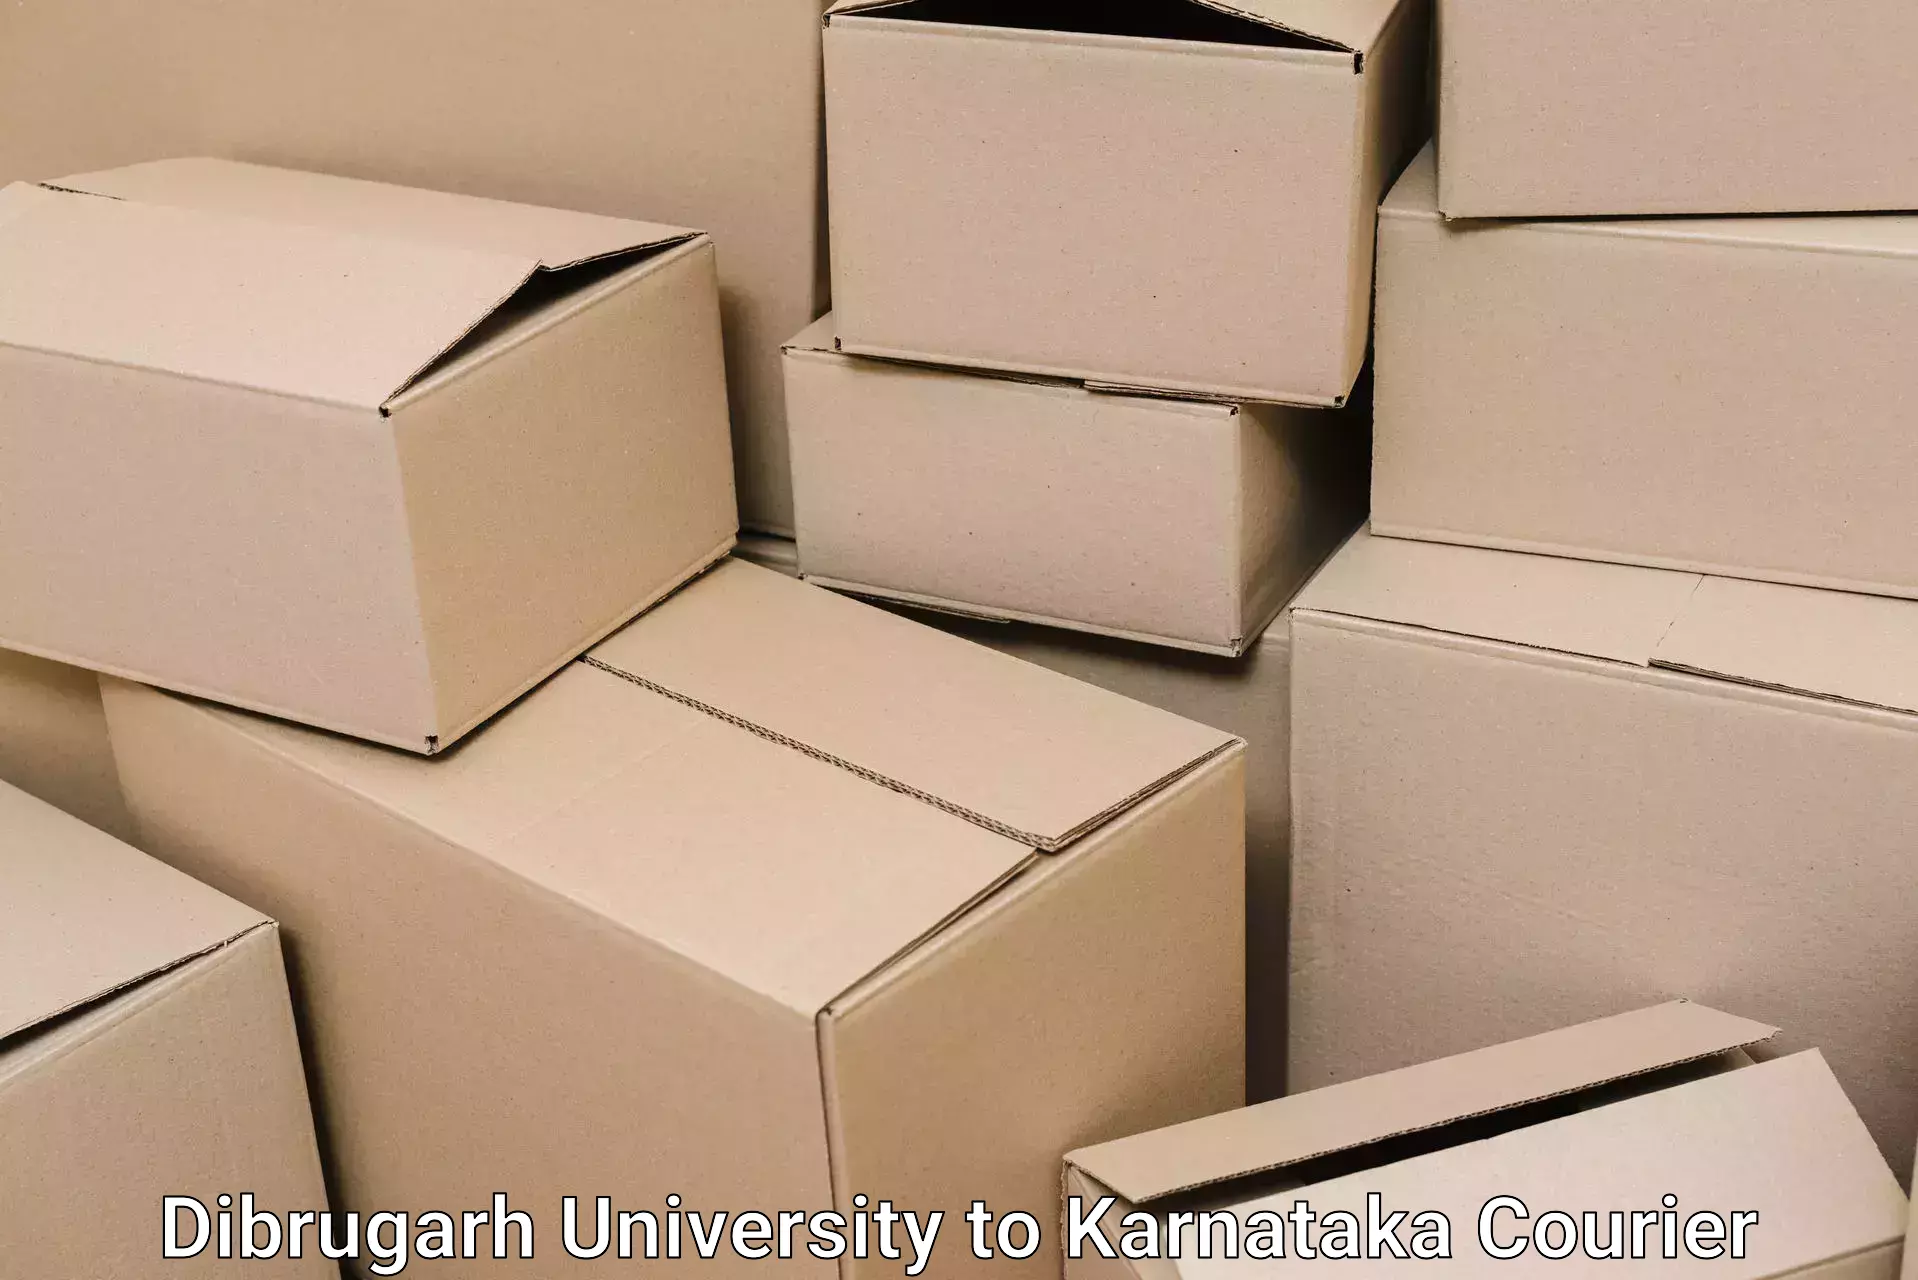 Efficient moving company Dibrugarh University to Karnataka